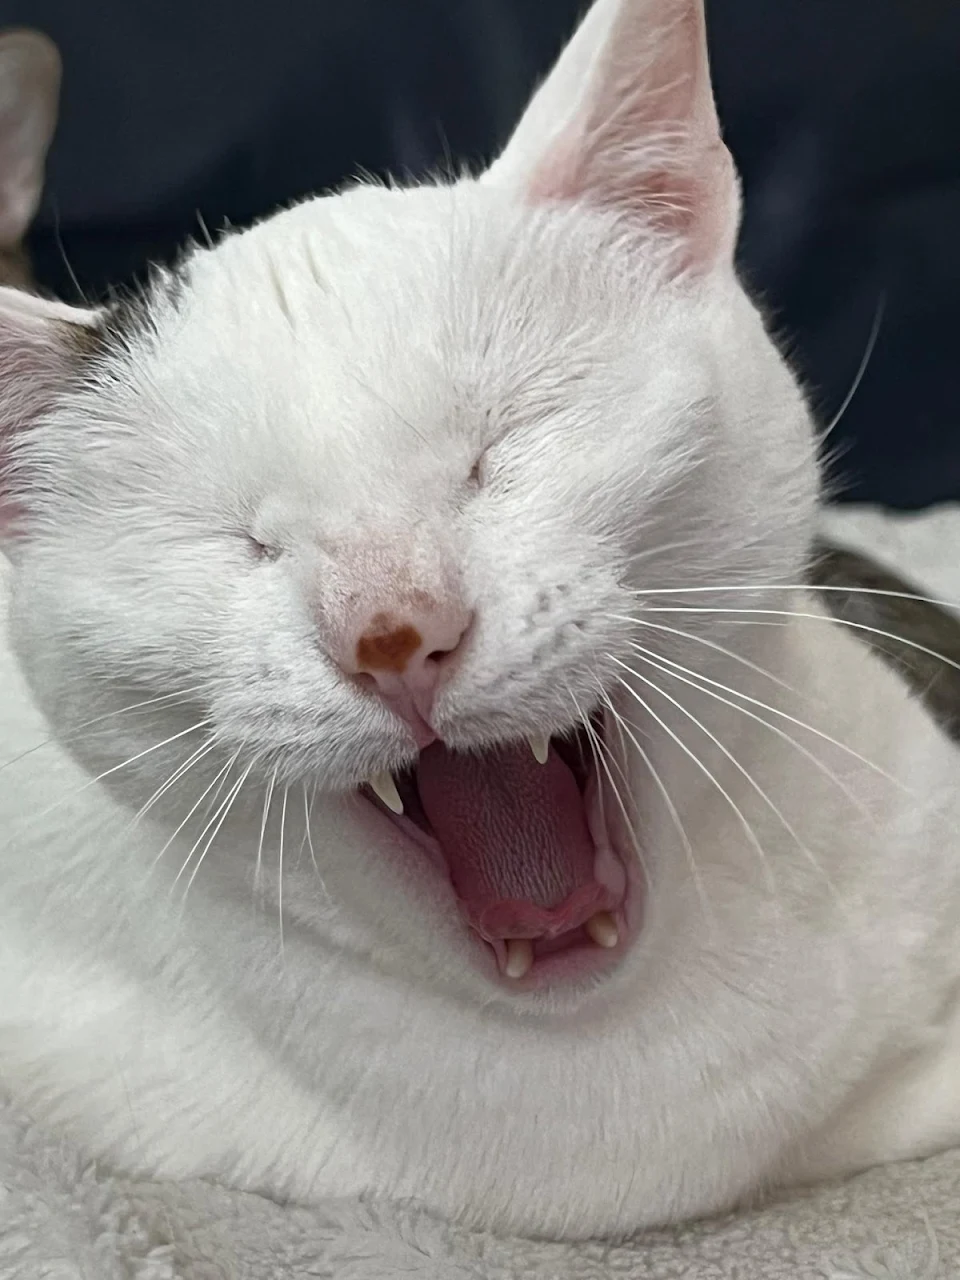 Cat mid yawn